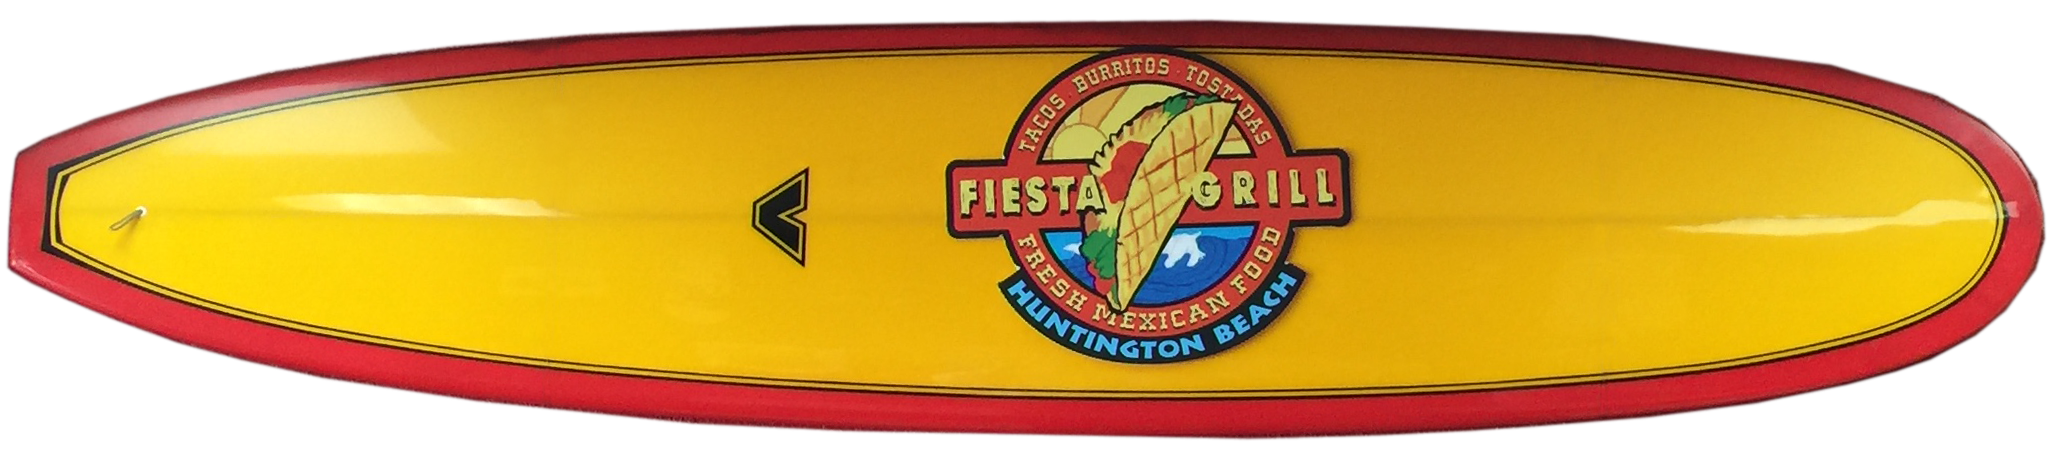 Fiesta Grill Huntington Beach